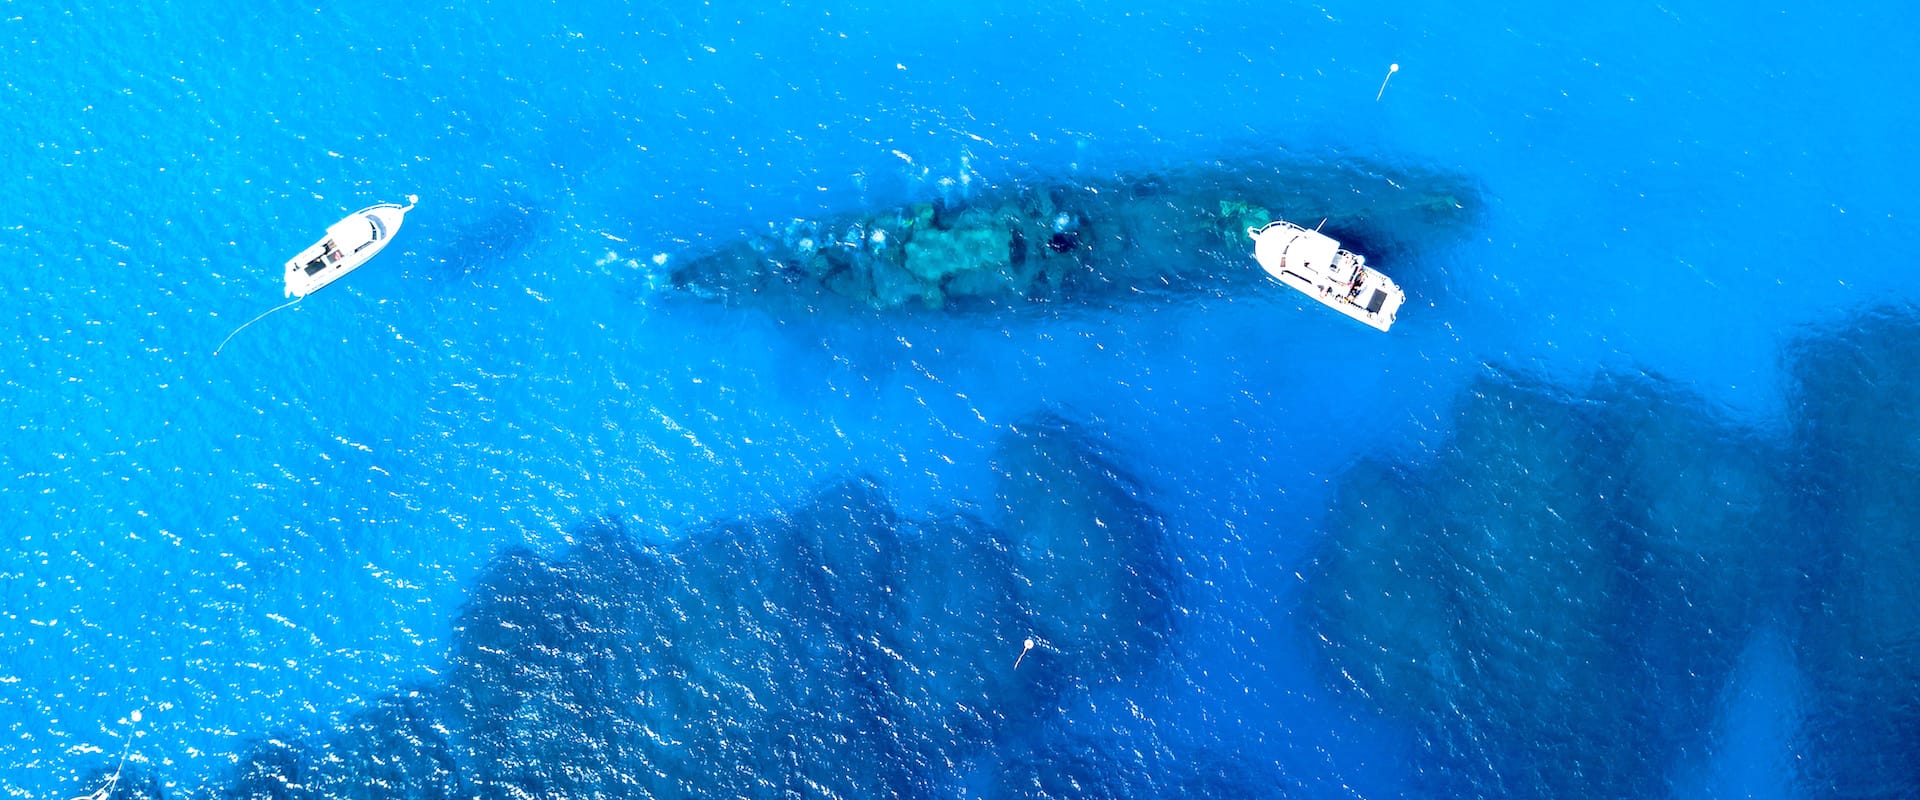 Snorkeling on the USS Kittiwake